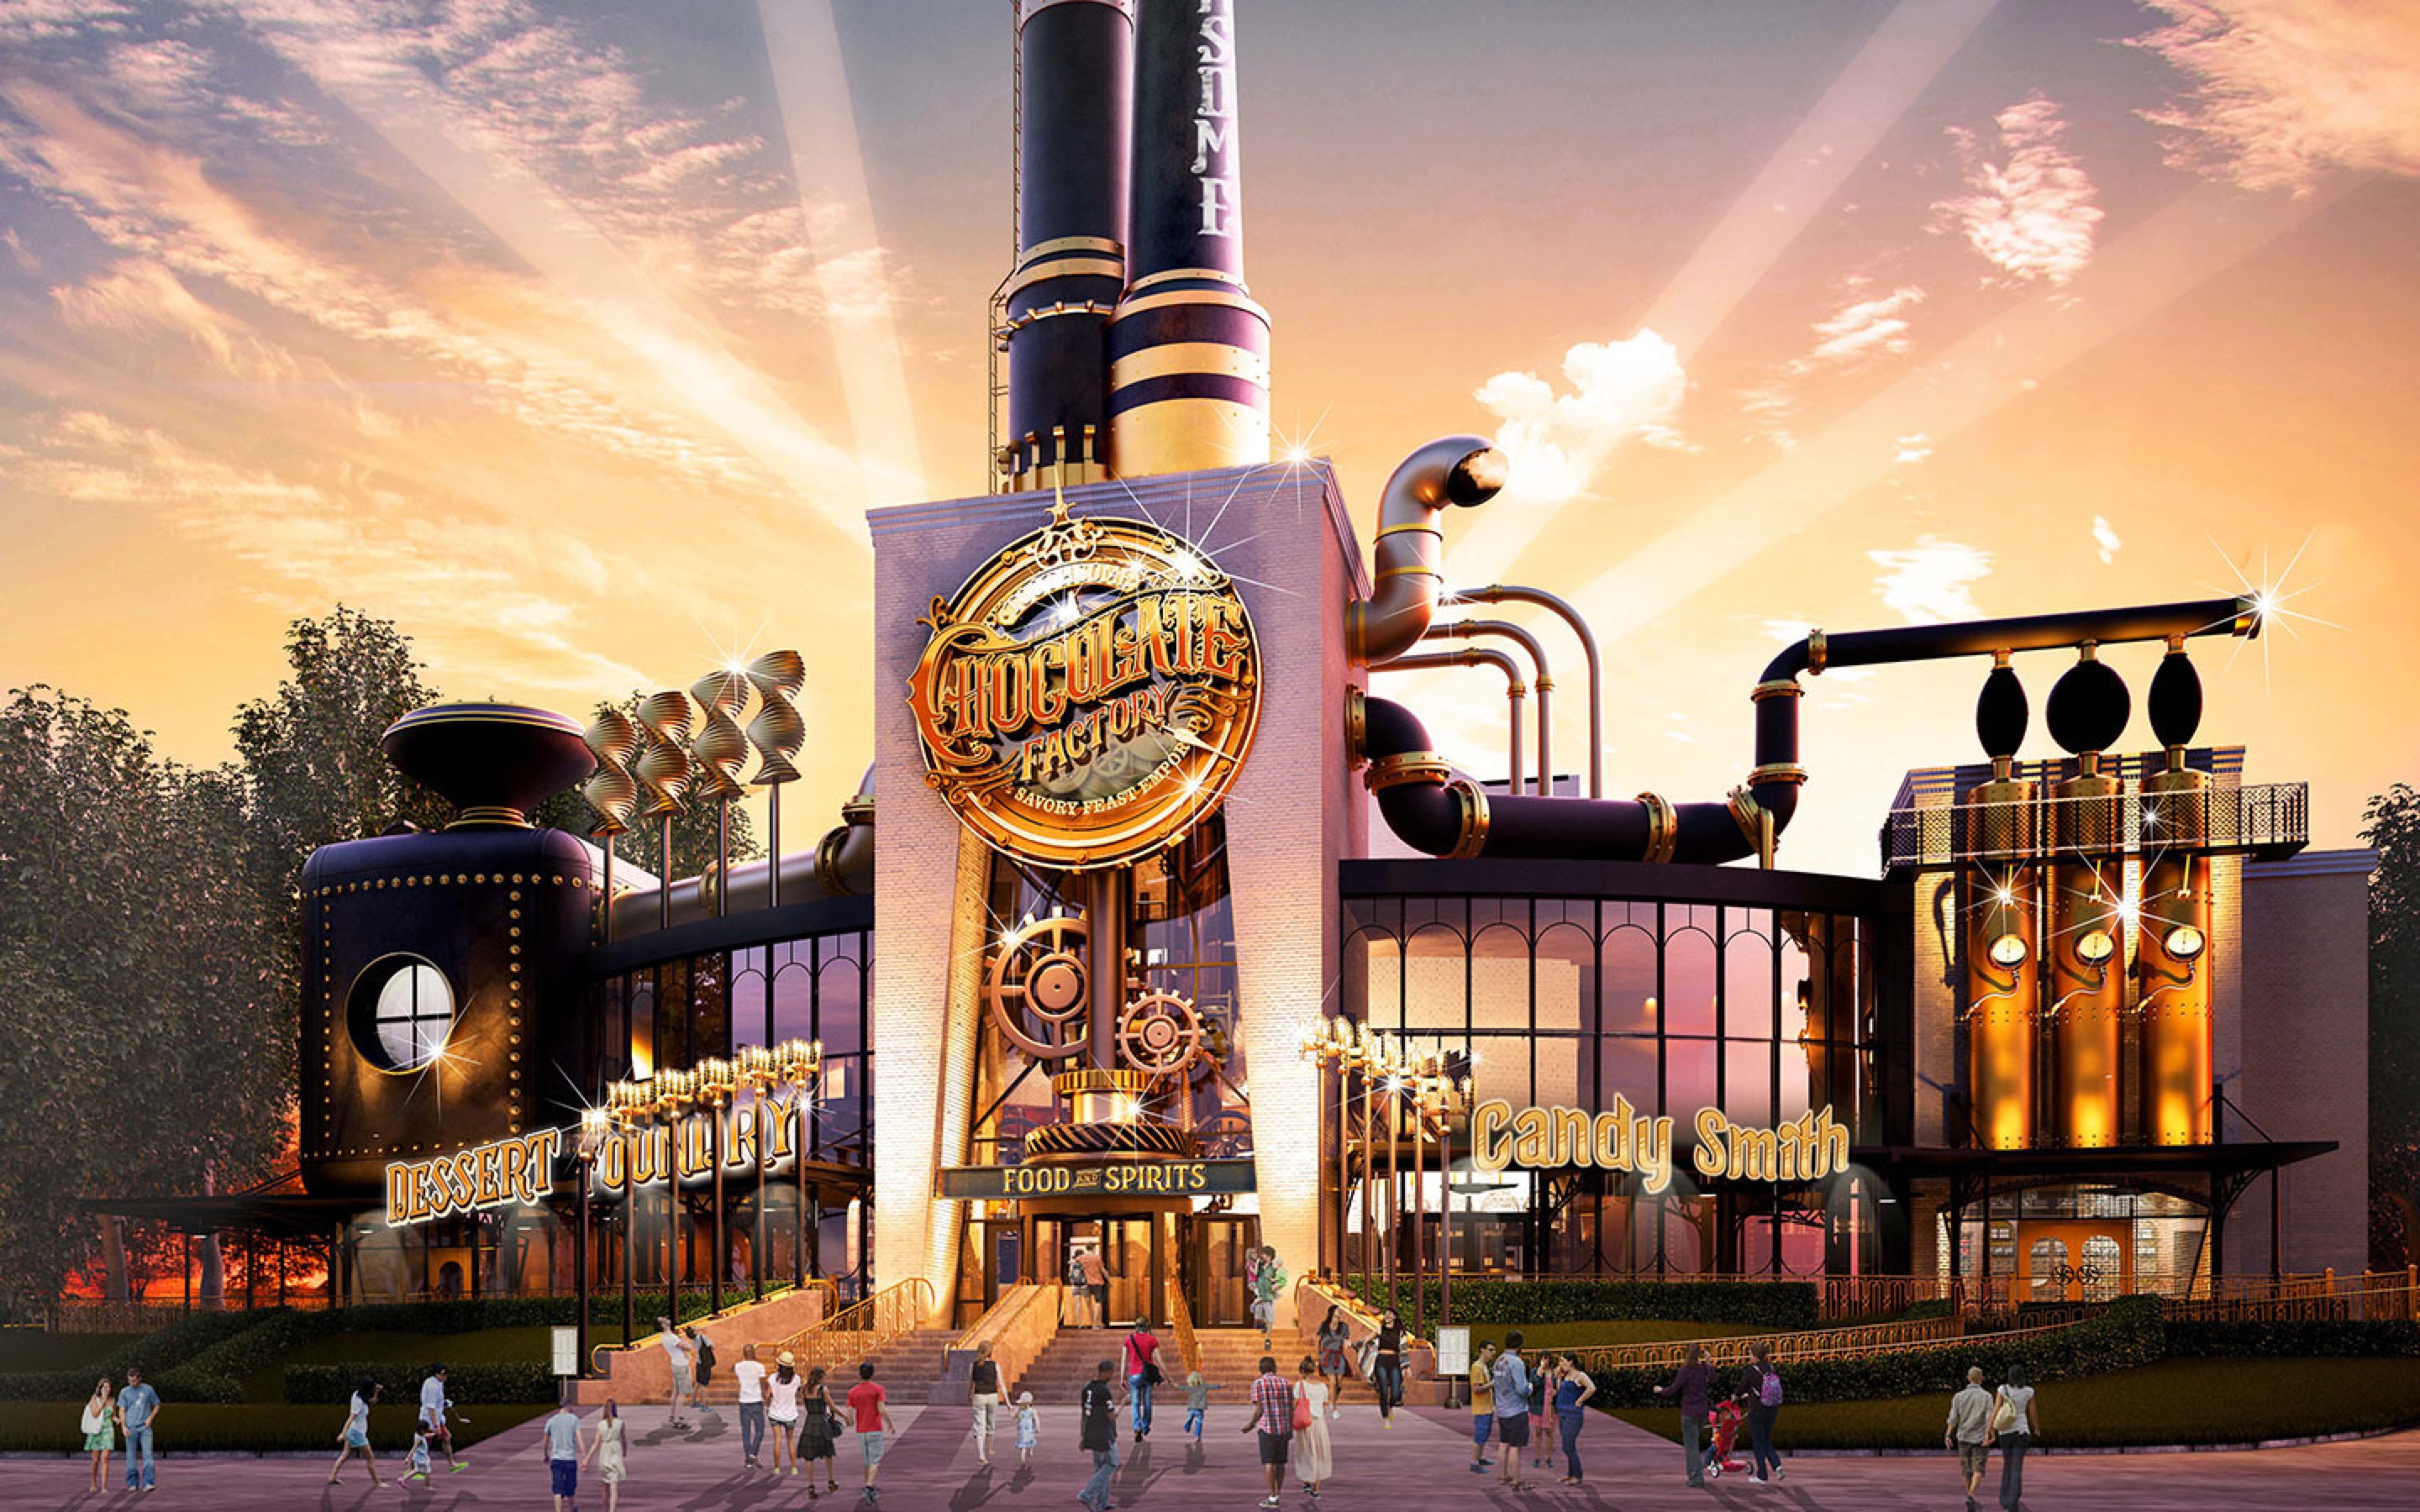 Willy Wonka The Chocolate Factory Universal Building Real-Life Willy Wonka's Chocolate Factory, Broadway